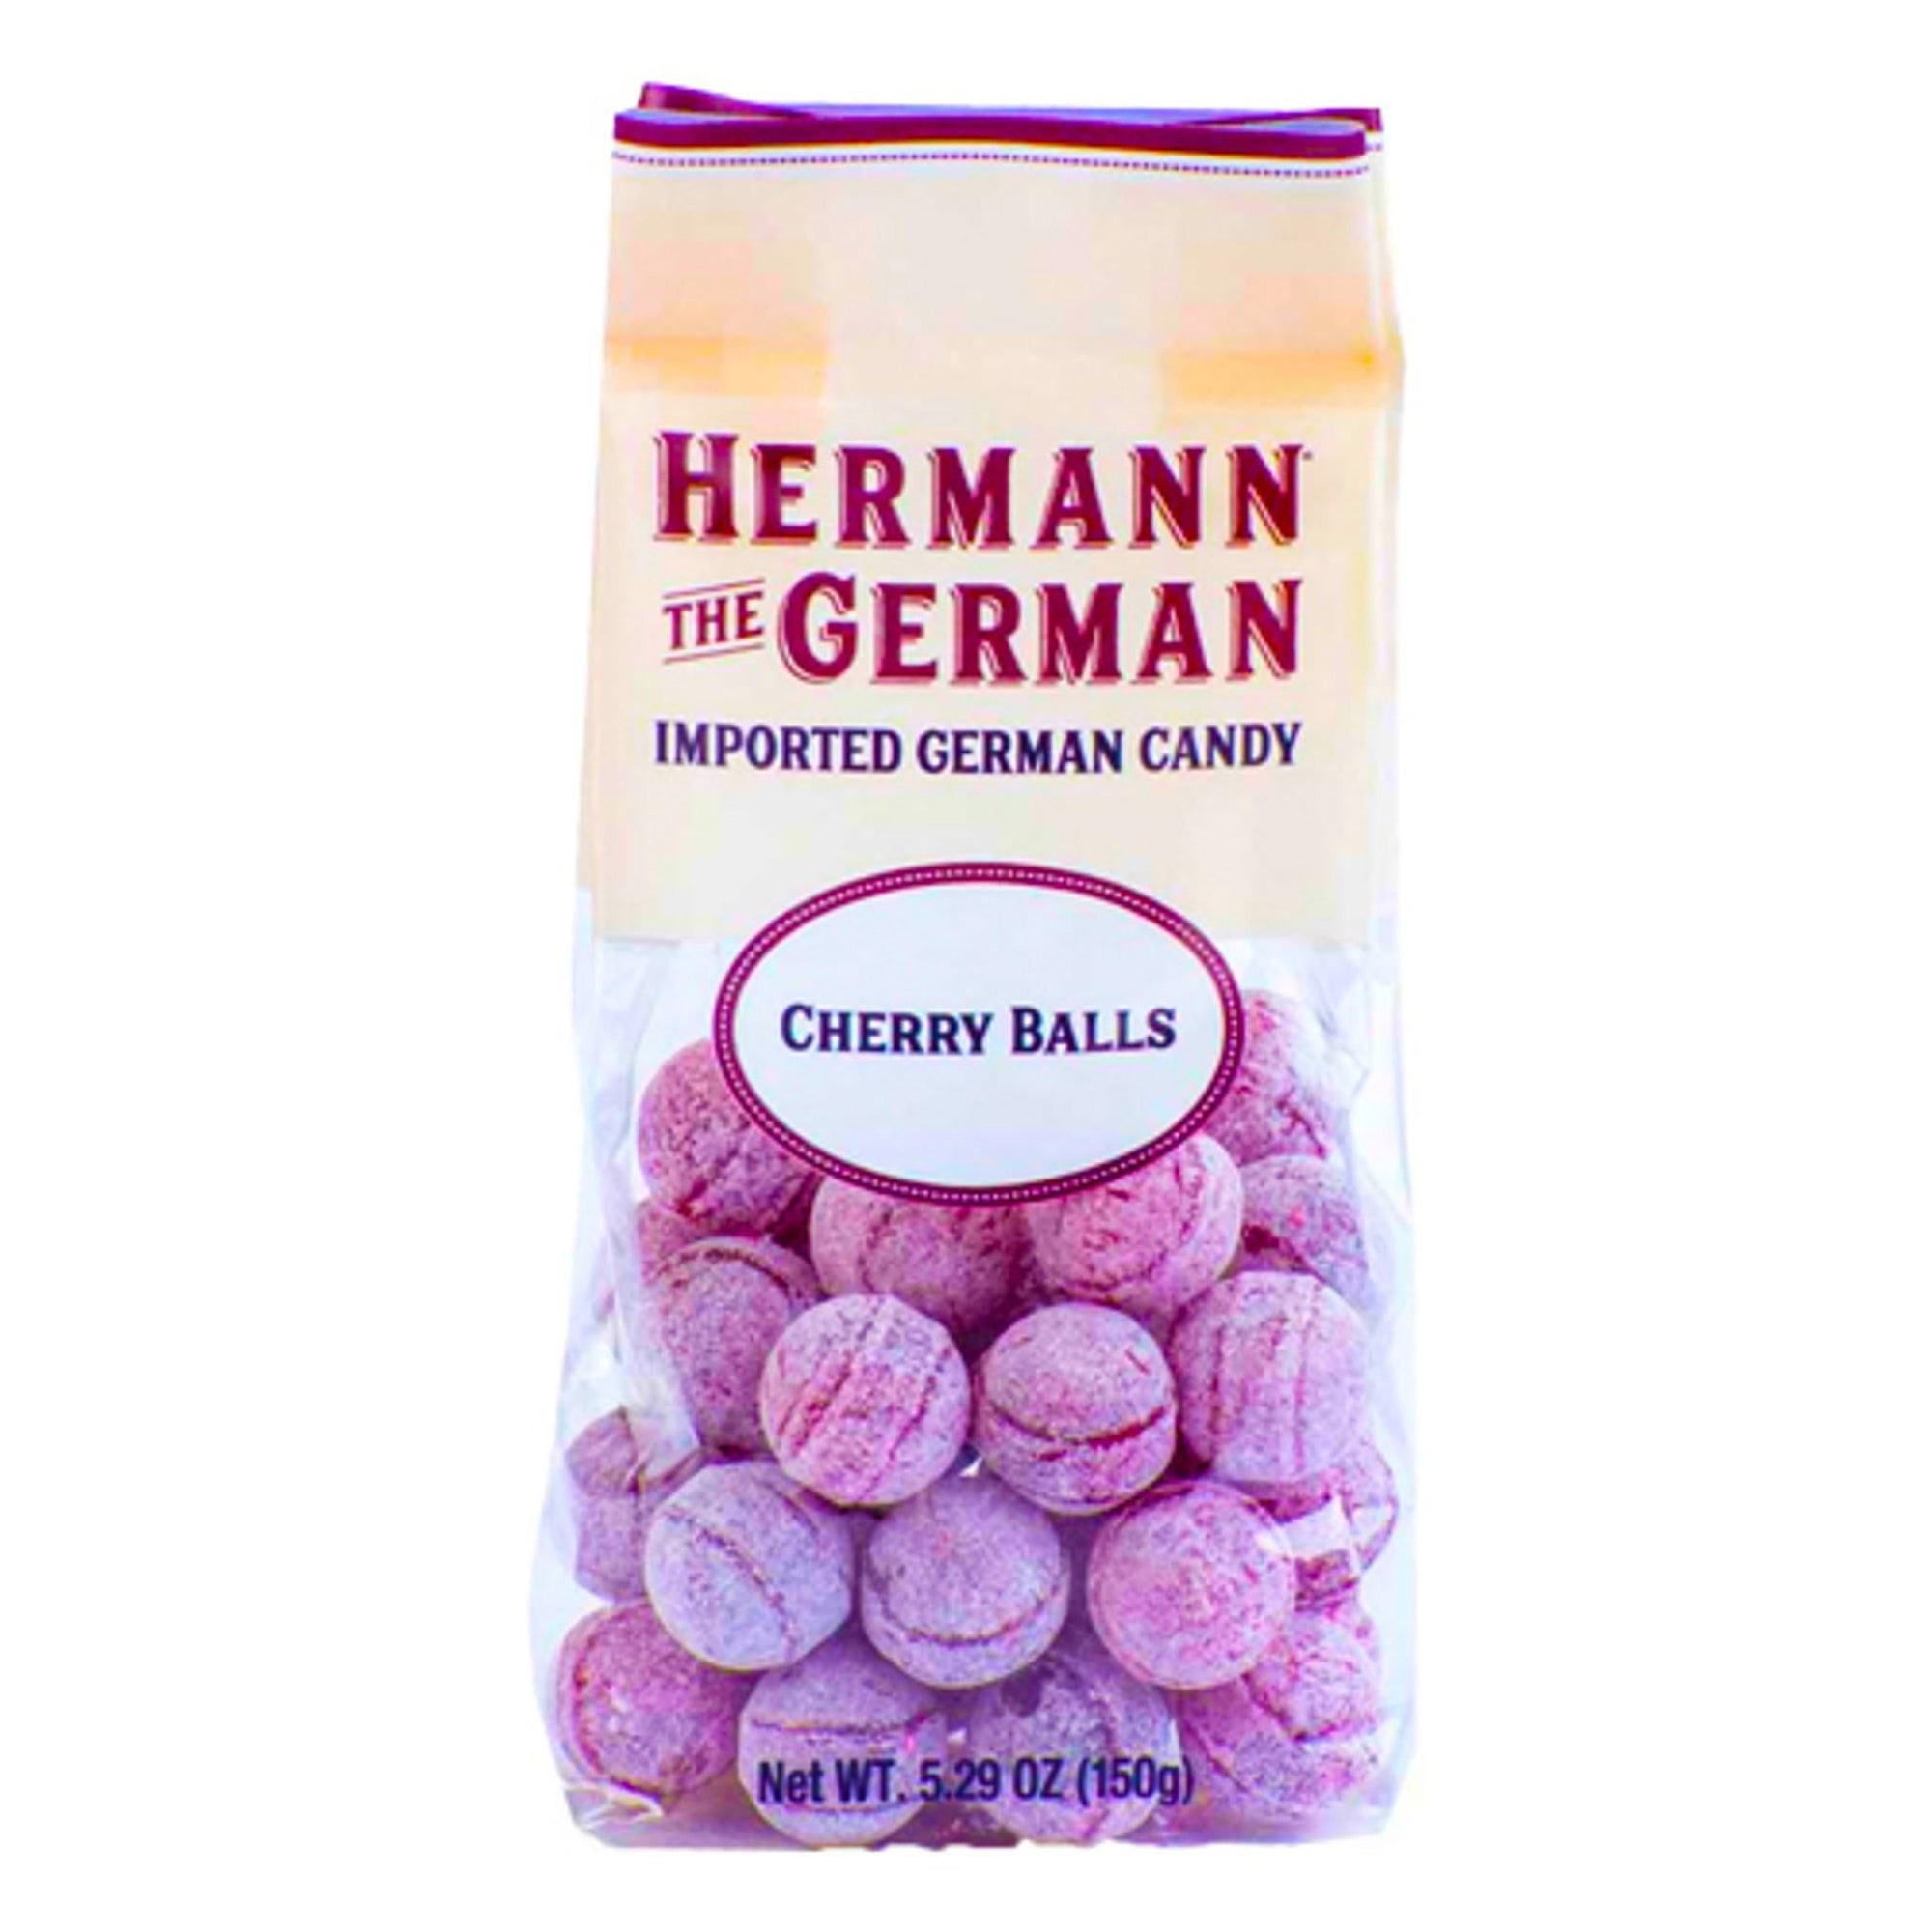 Hermann the German Hard Candy | Cherry Balls